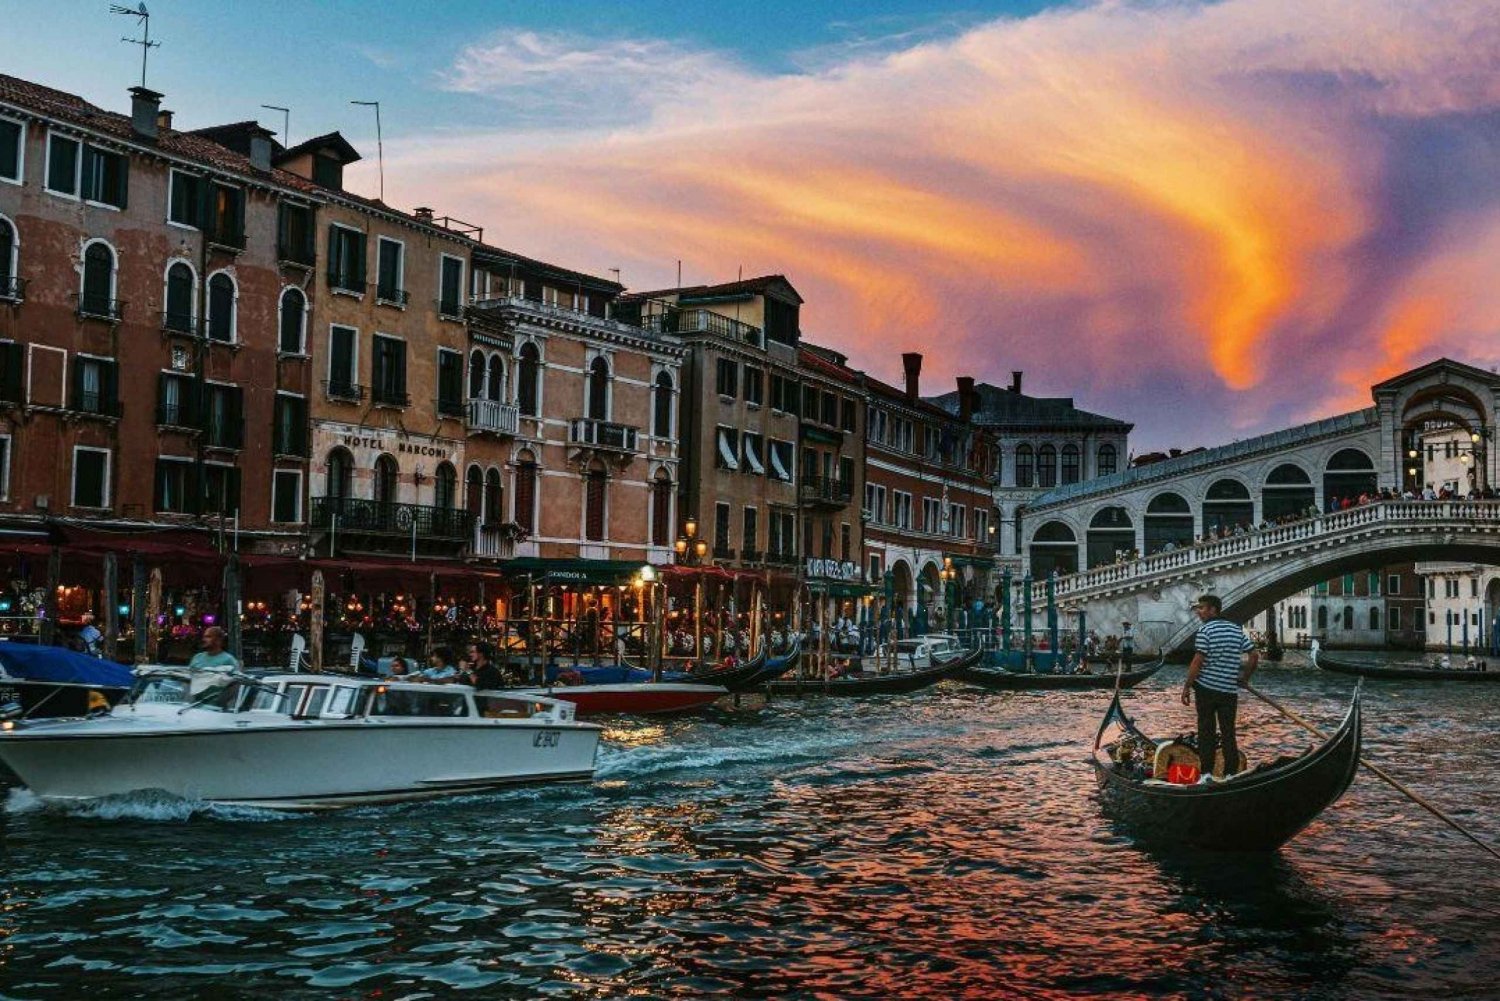 Venice: Shared Gondola Ride at Sunset